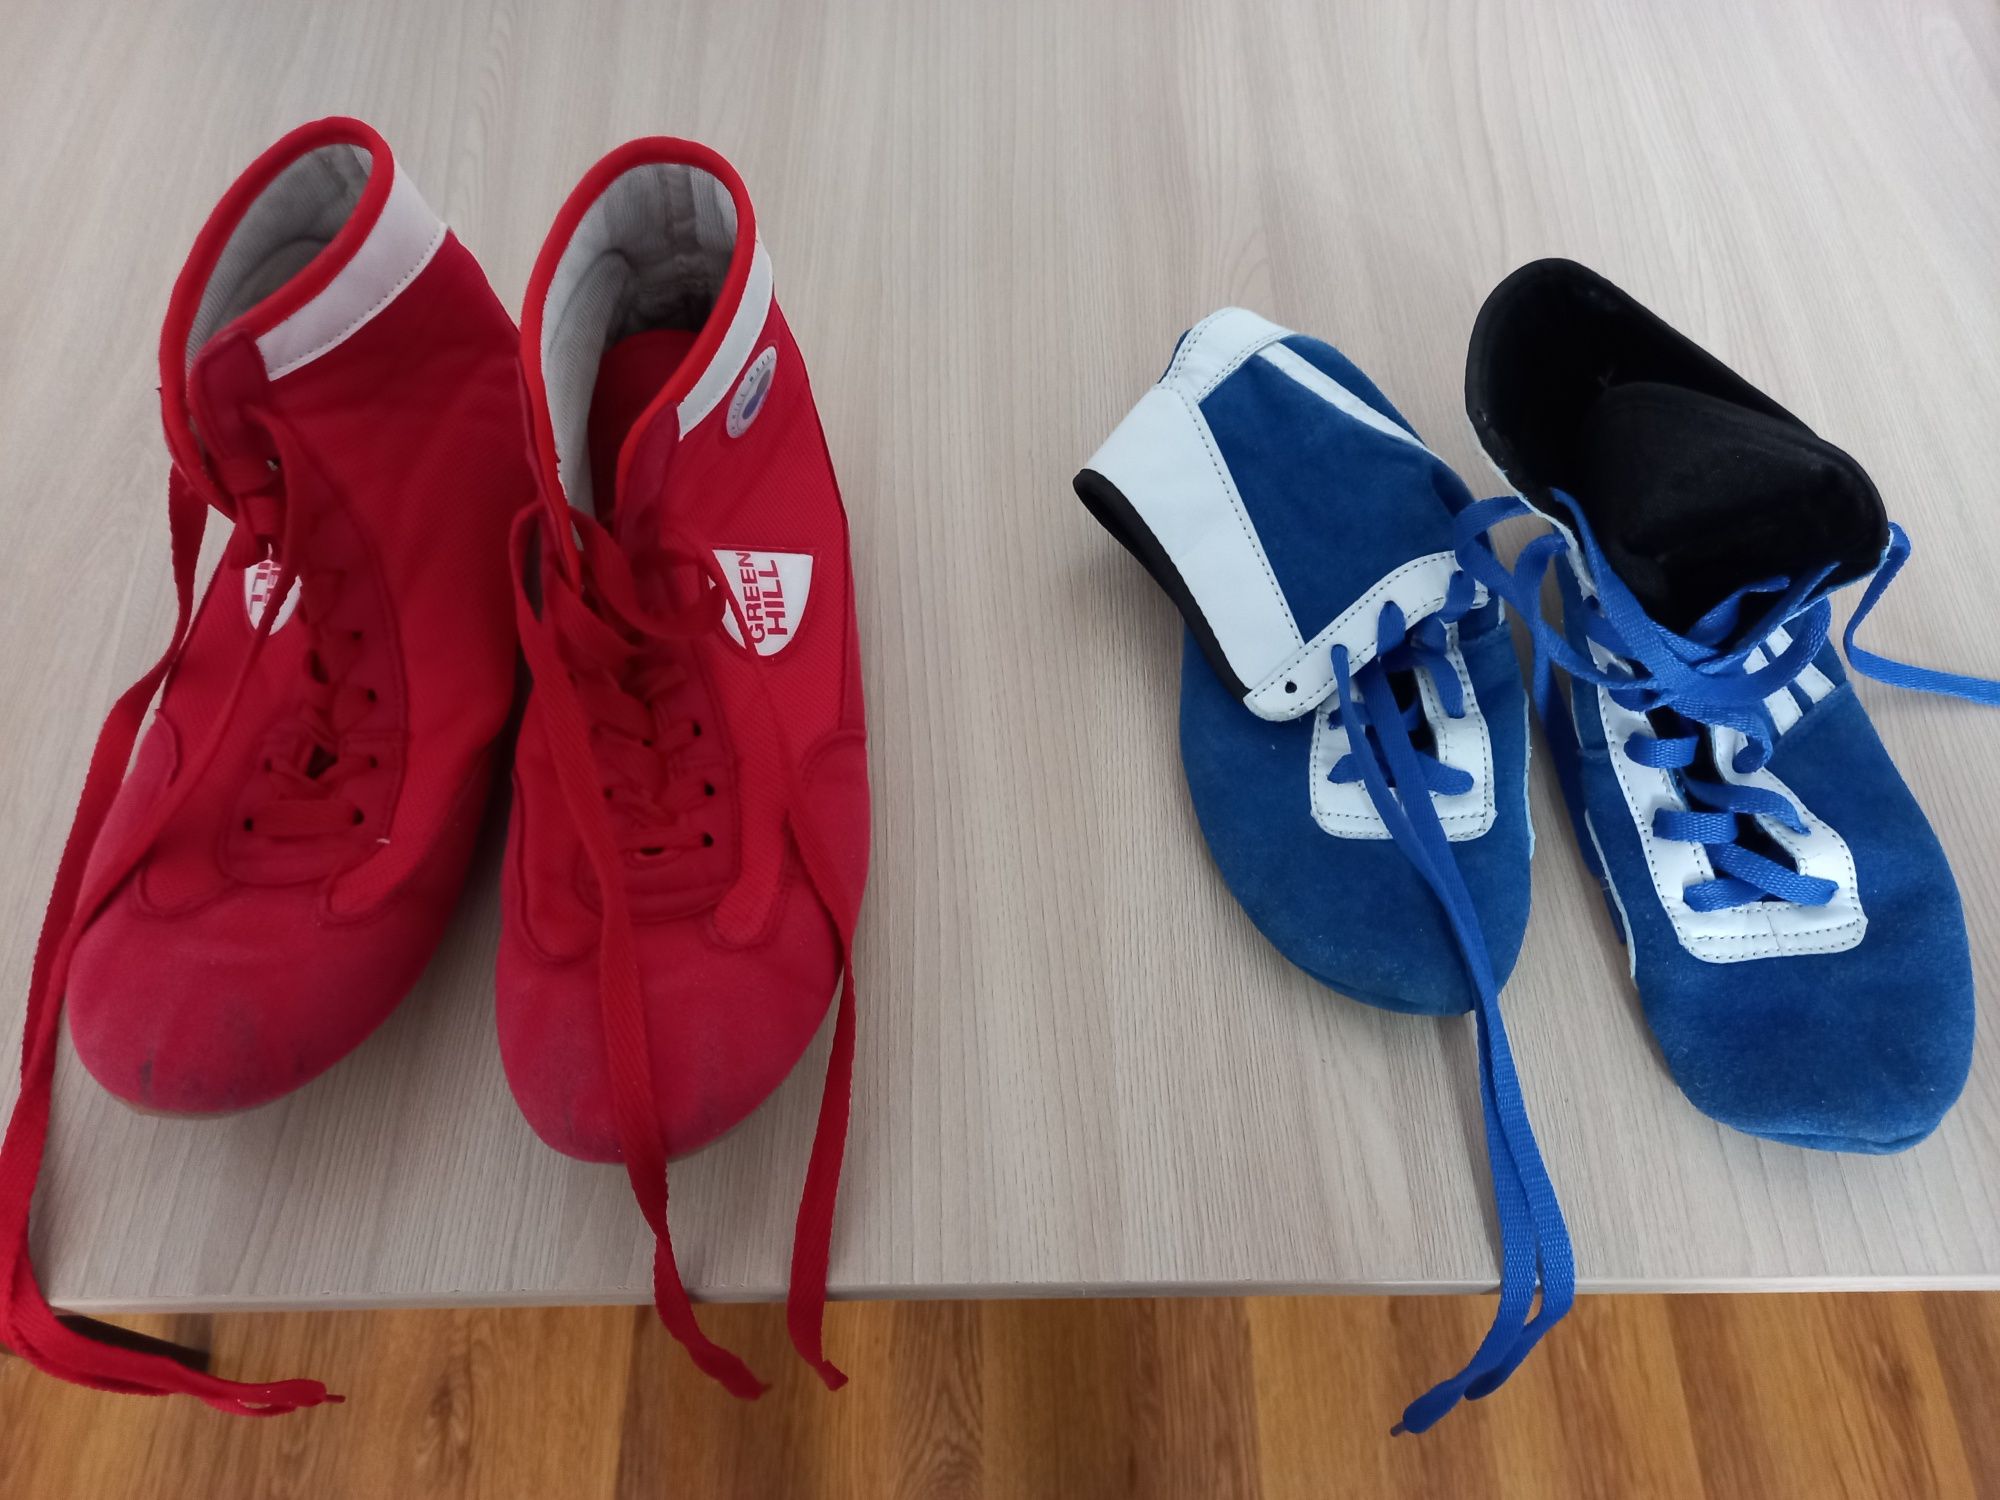 Борцовки  красная и синии, обувь борцовки красная и синяя.